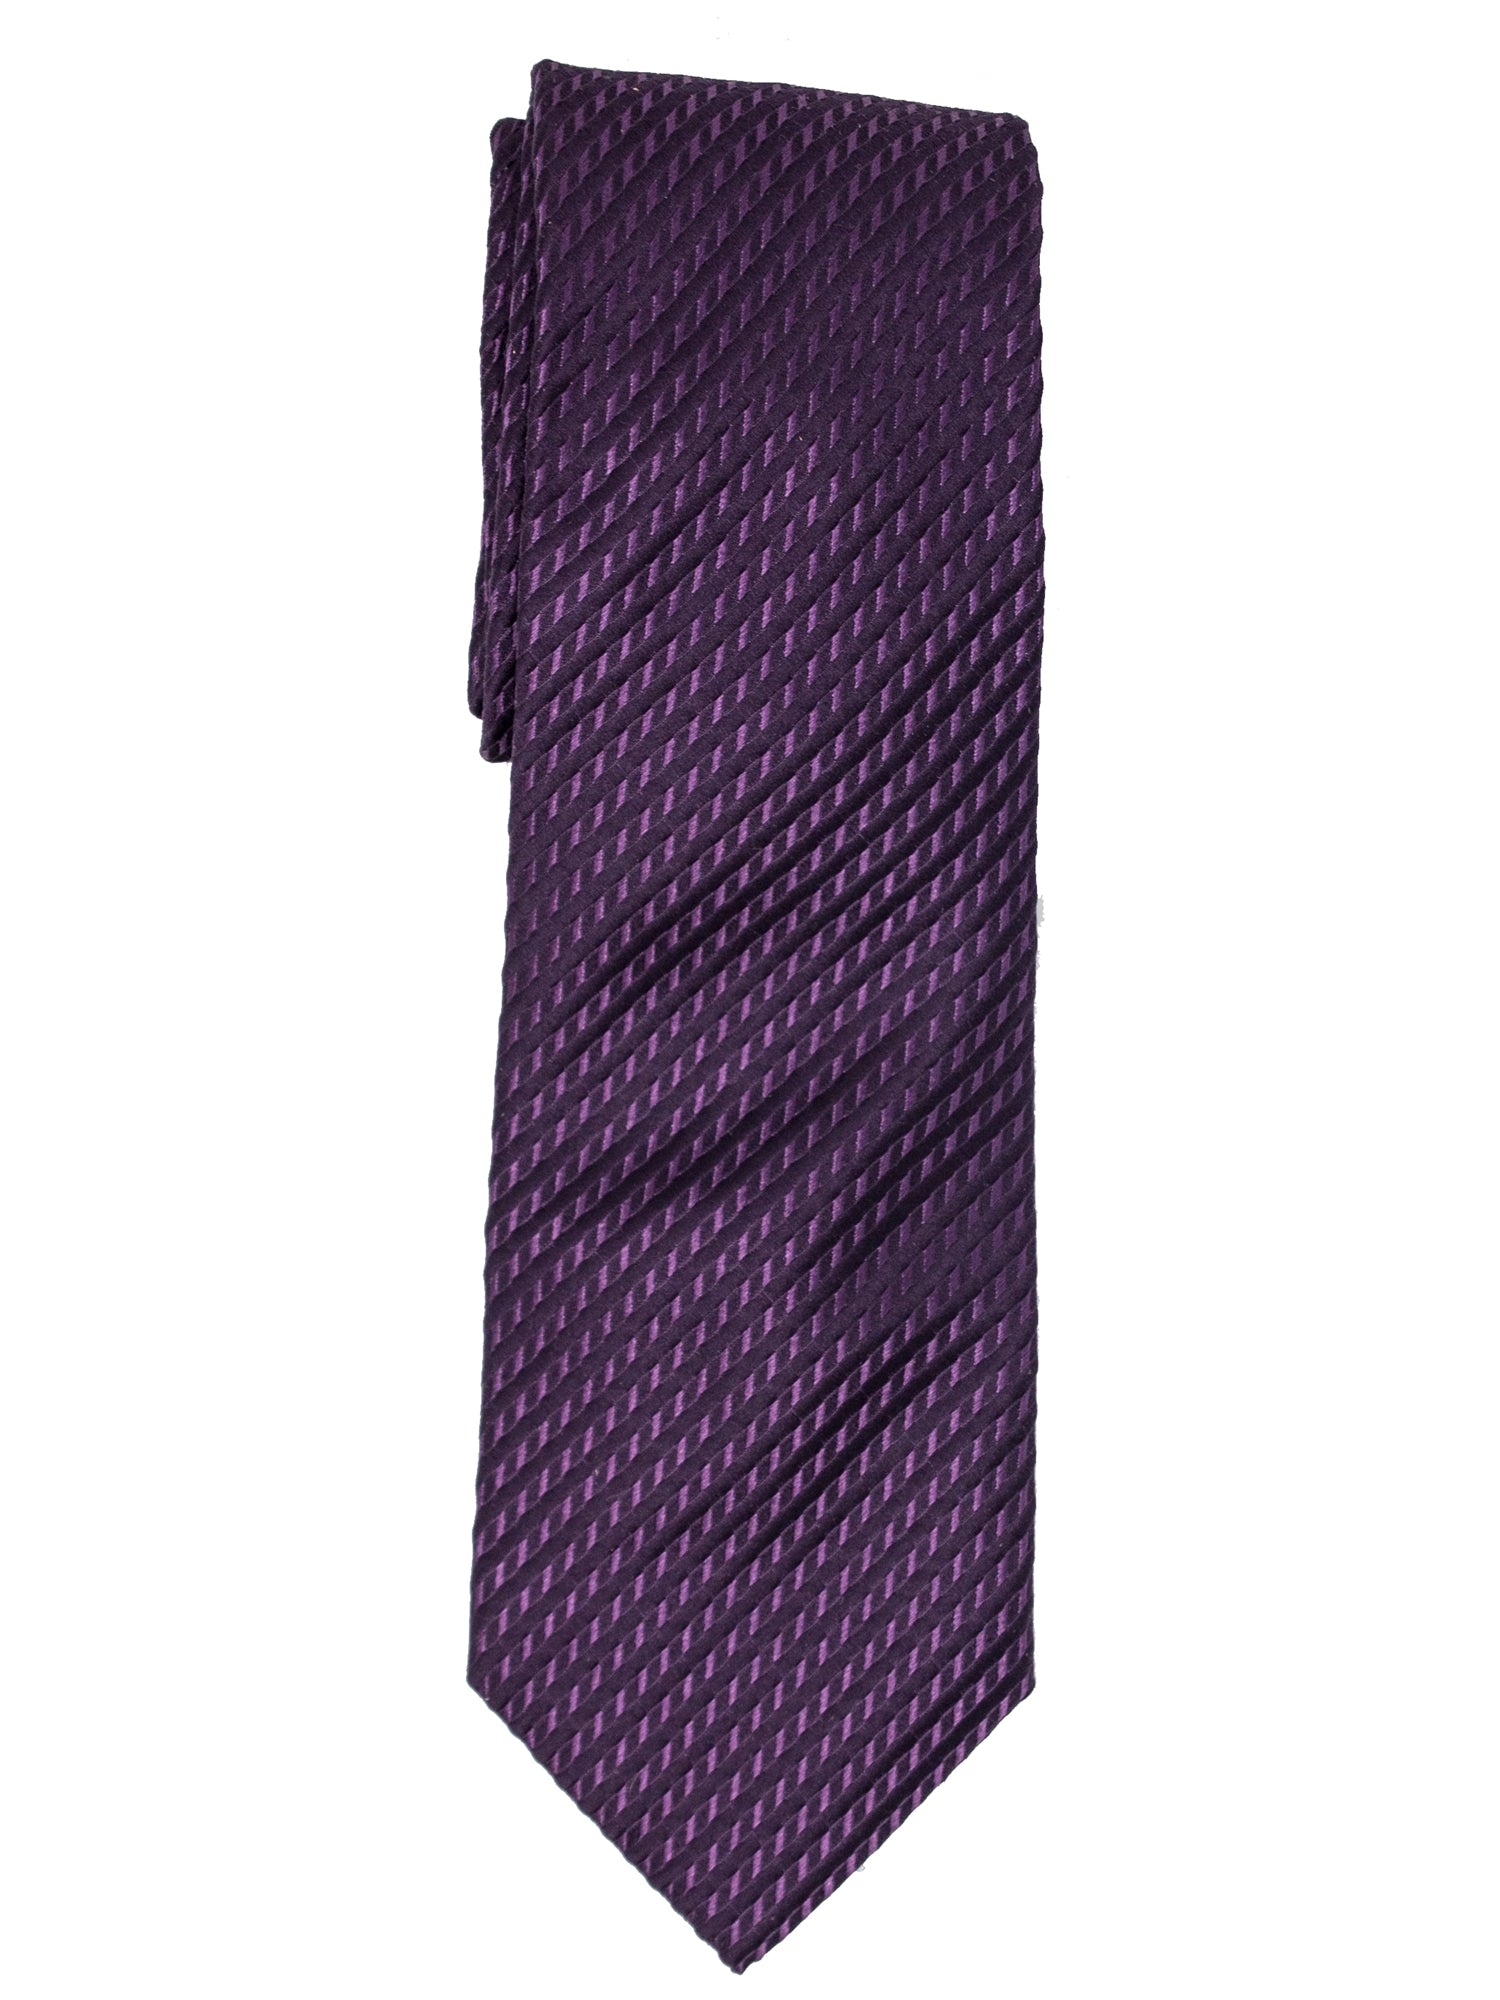 Men's Silk Woven Wedding Neck Tie Collection Neck Tie TheDapperTie Dark Purple Textured Solid Regular 